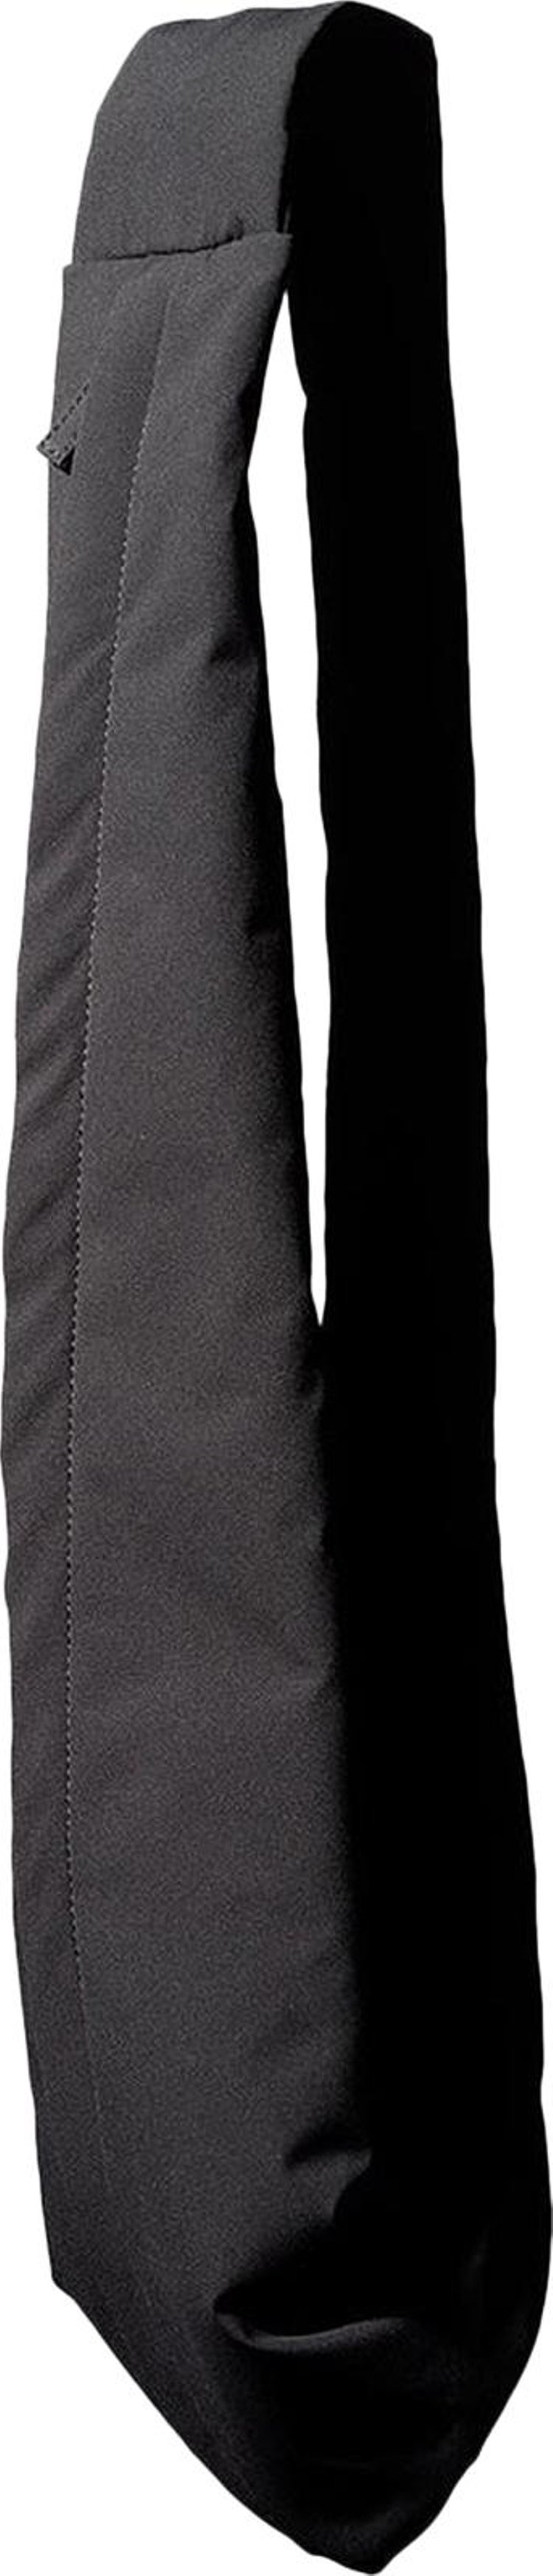 Сумка Yeezy Gap Engineered by Balenciaga Snake Bag Black, черный цена и фото